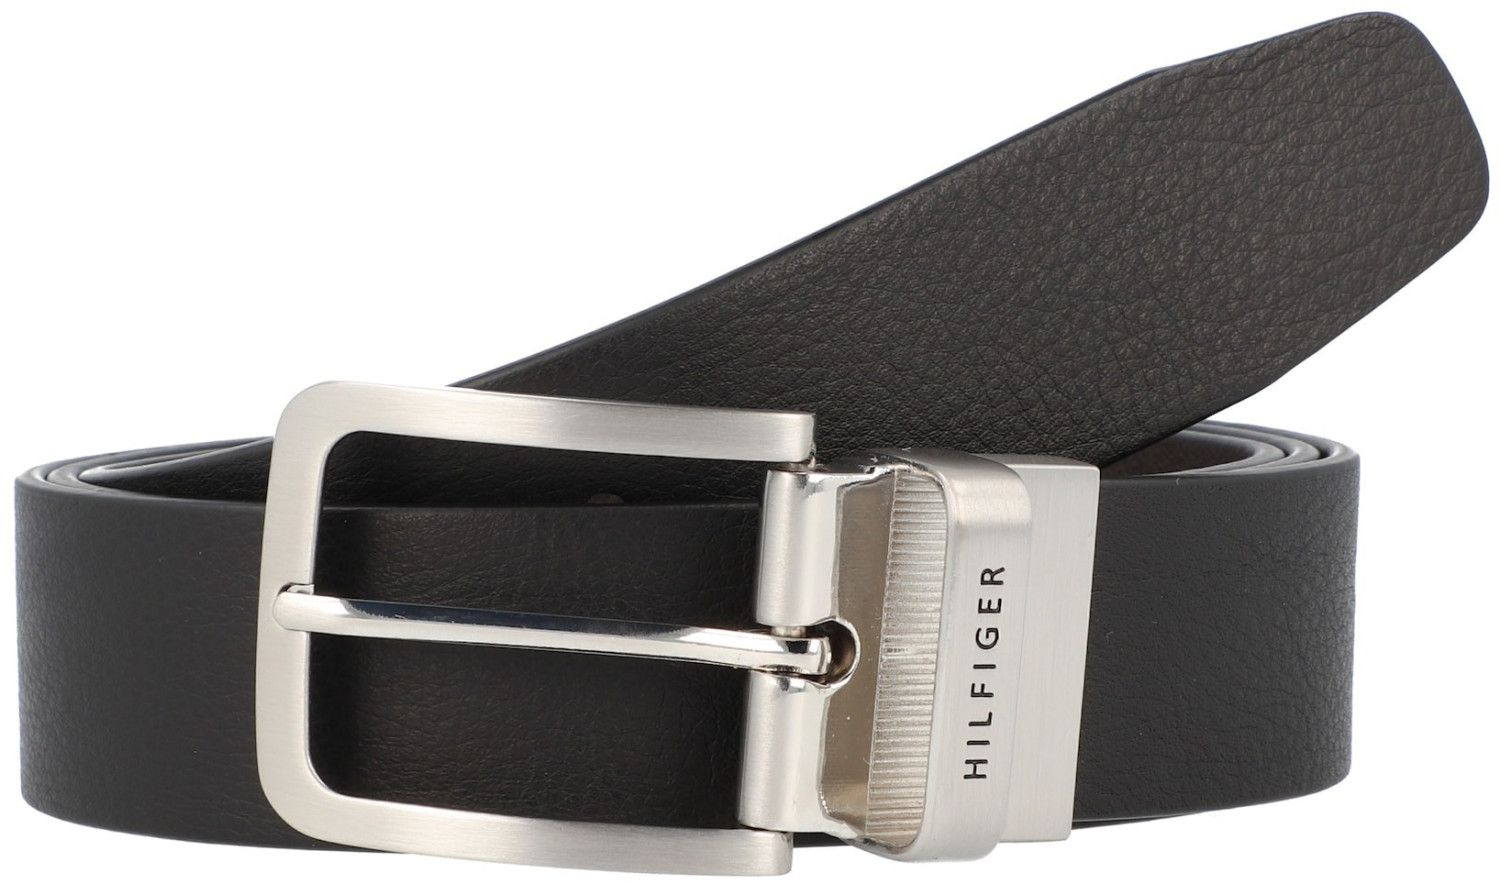 Tommy Hilfiger Reversible Leather Silver-Tone Loop Belt black/brown  (AM0AM03111) ab 40,80 € | Preisvergleich bei